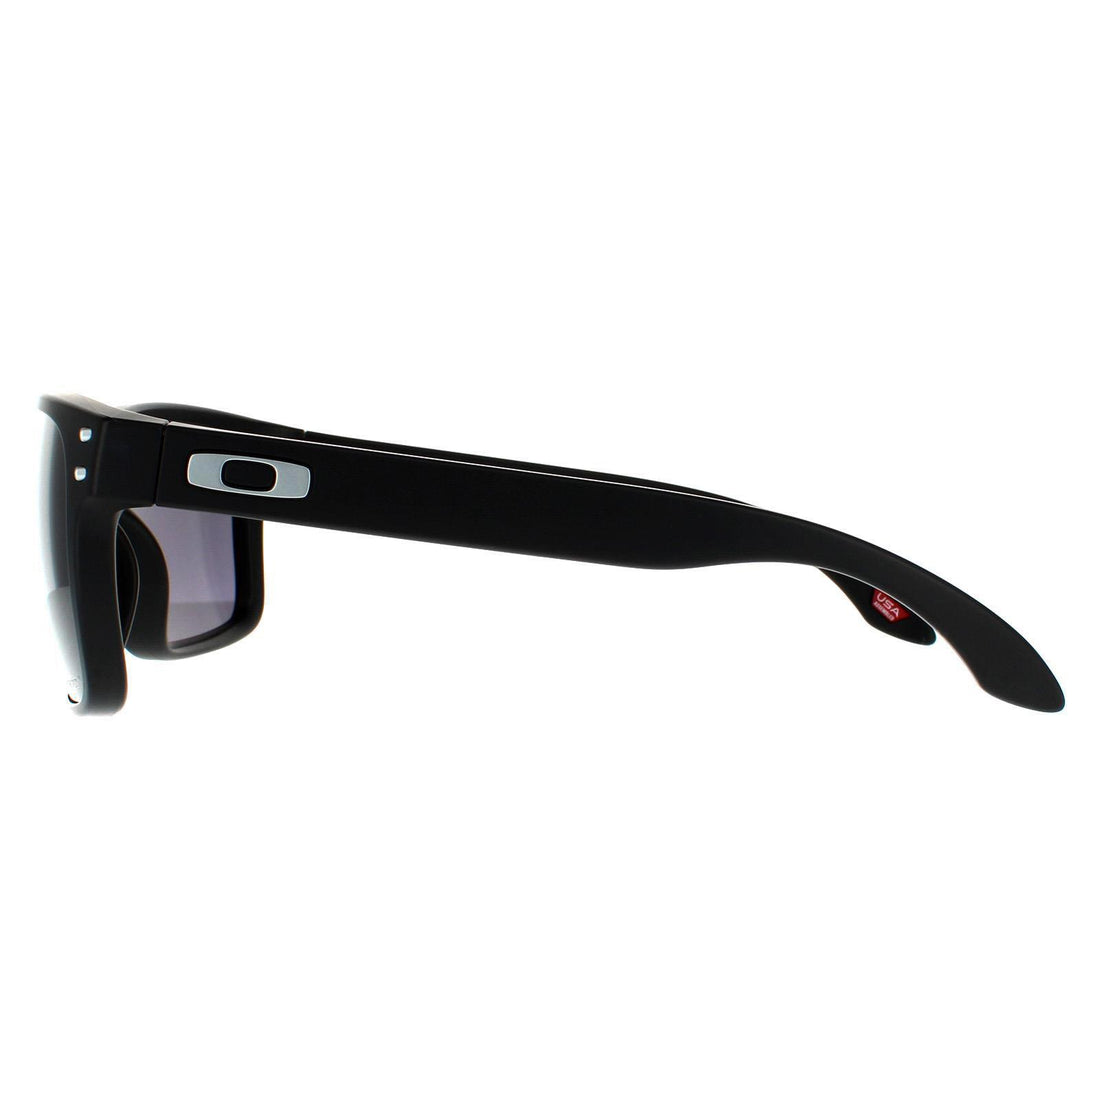 Oakley Sunglasses Holbrook OO9102-E8 Matte Black Prizm Grey